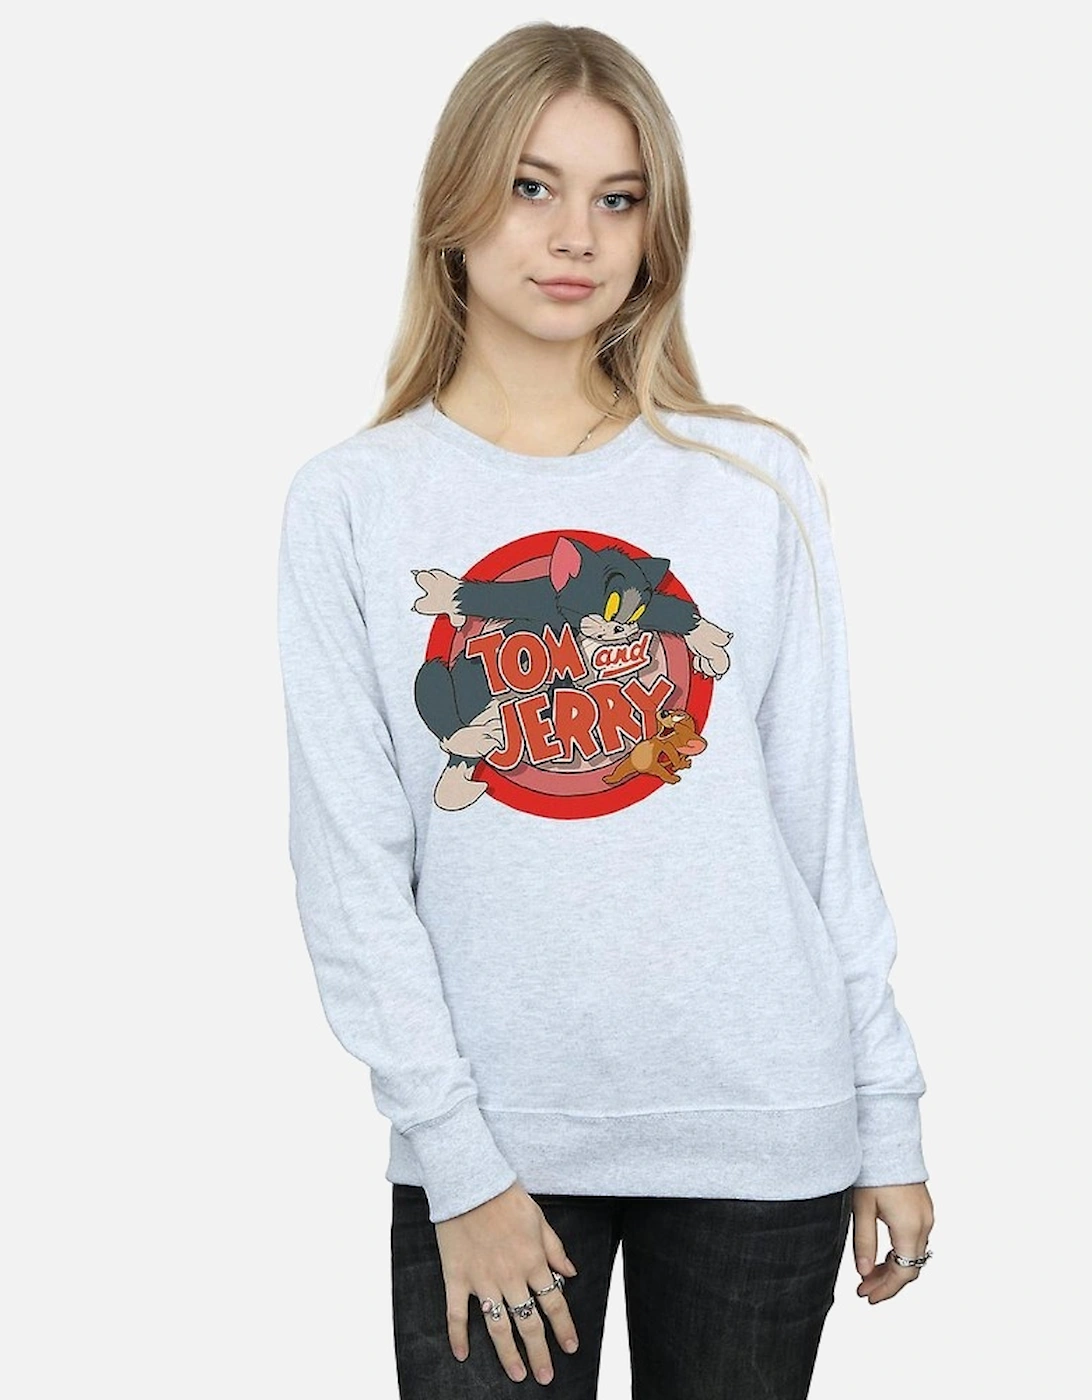 Tom and Jerry Womens/Ladies Classic Catch Sweatshirt